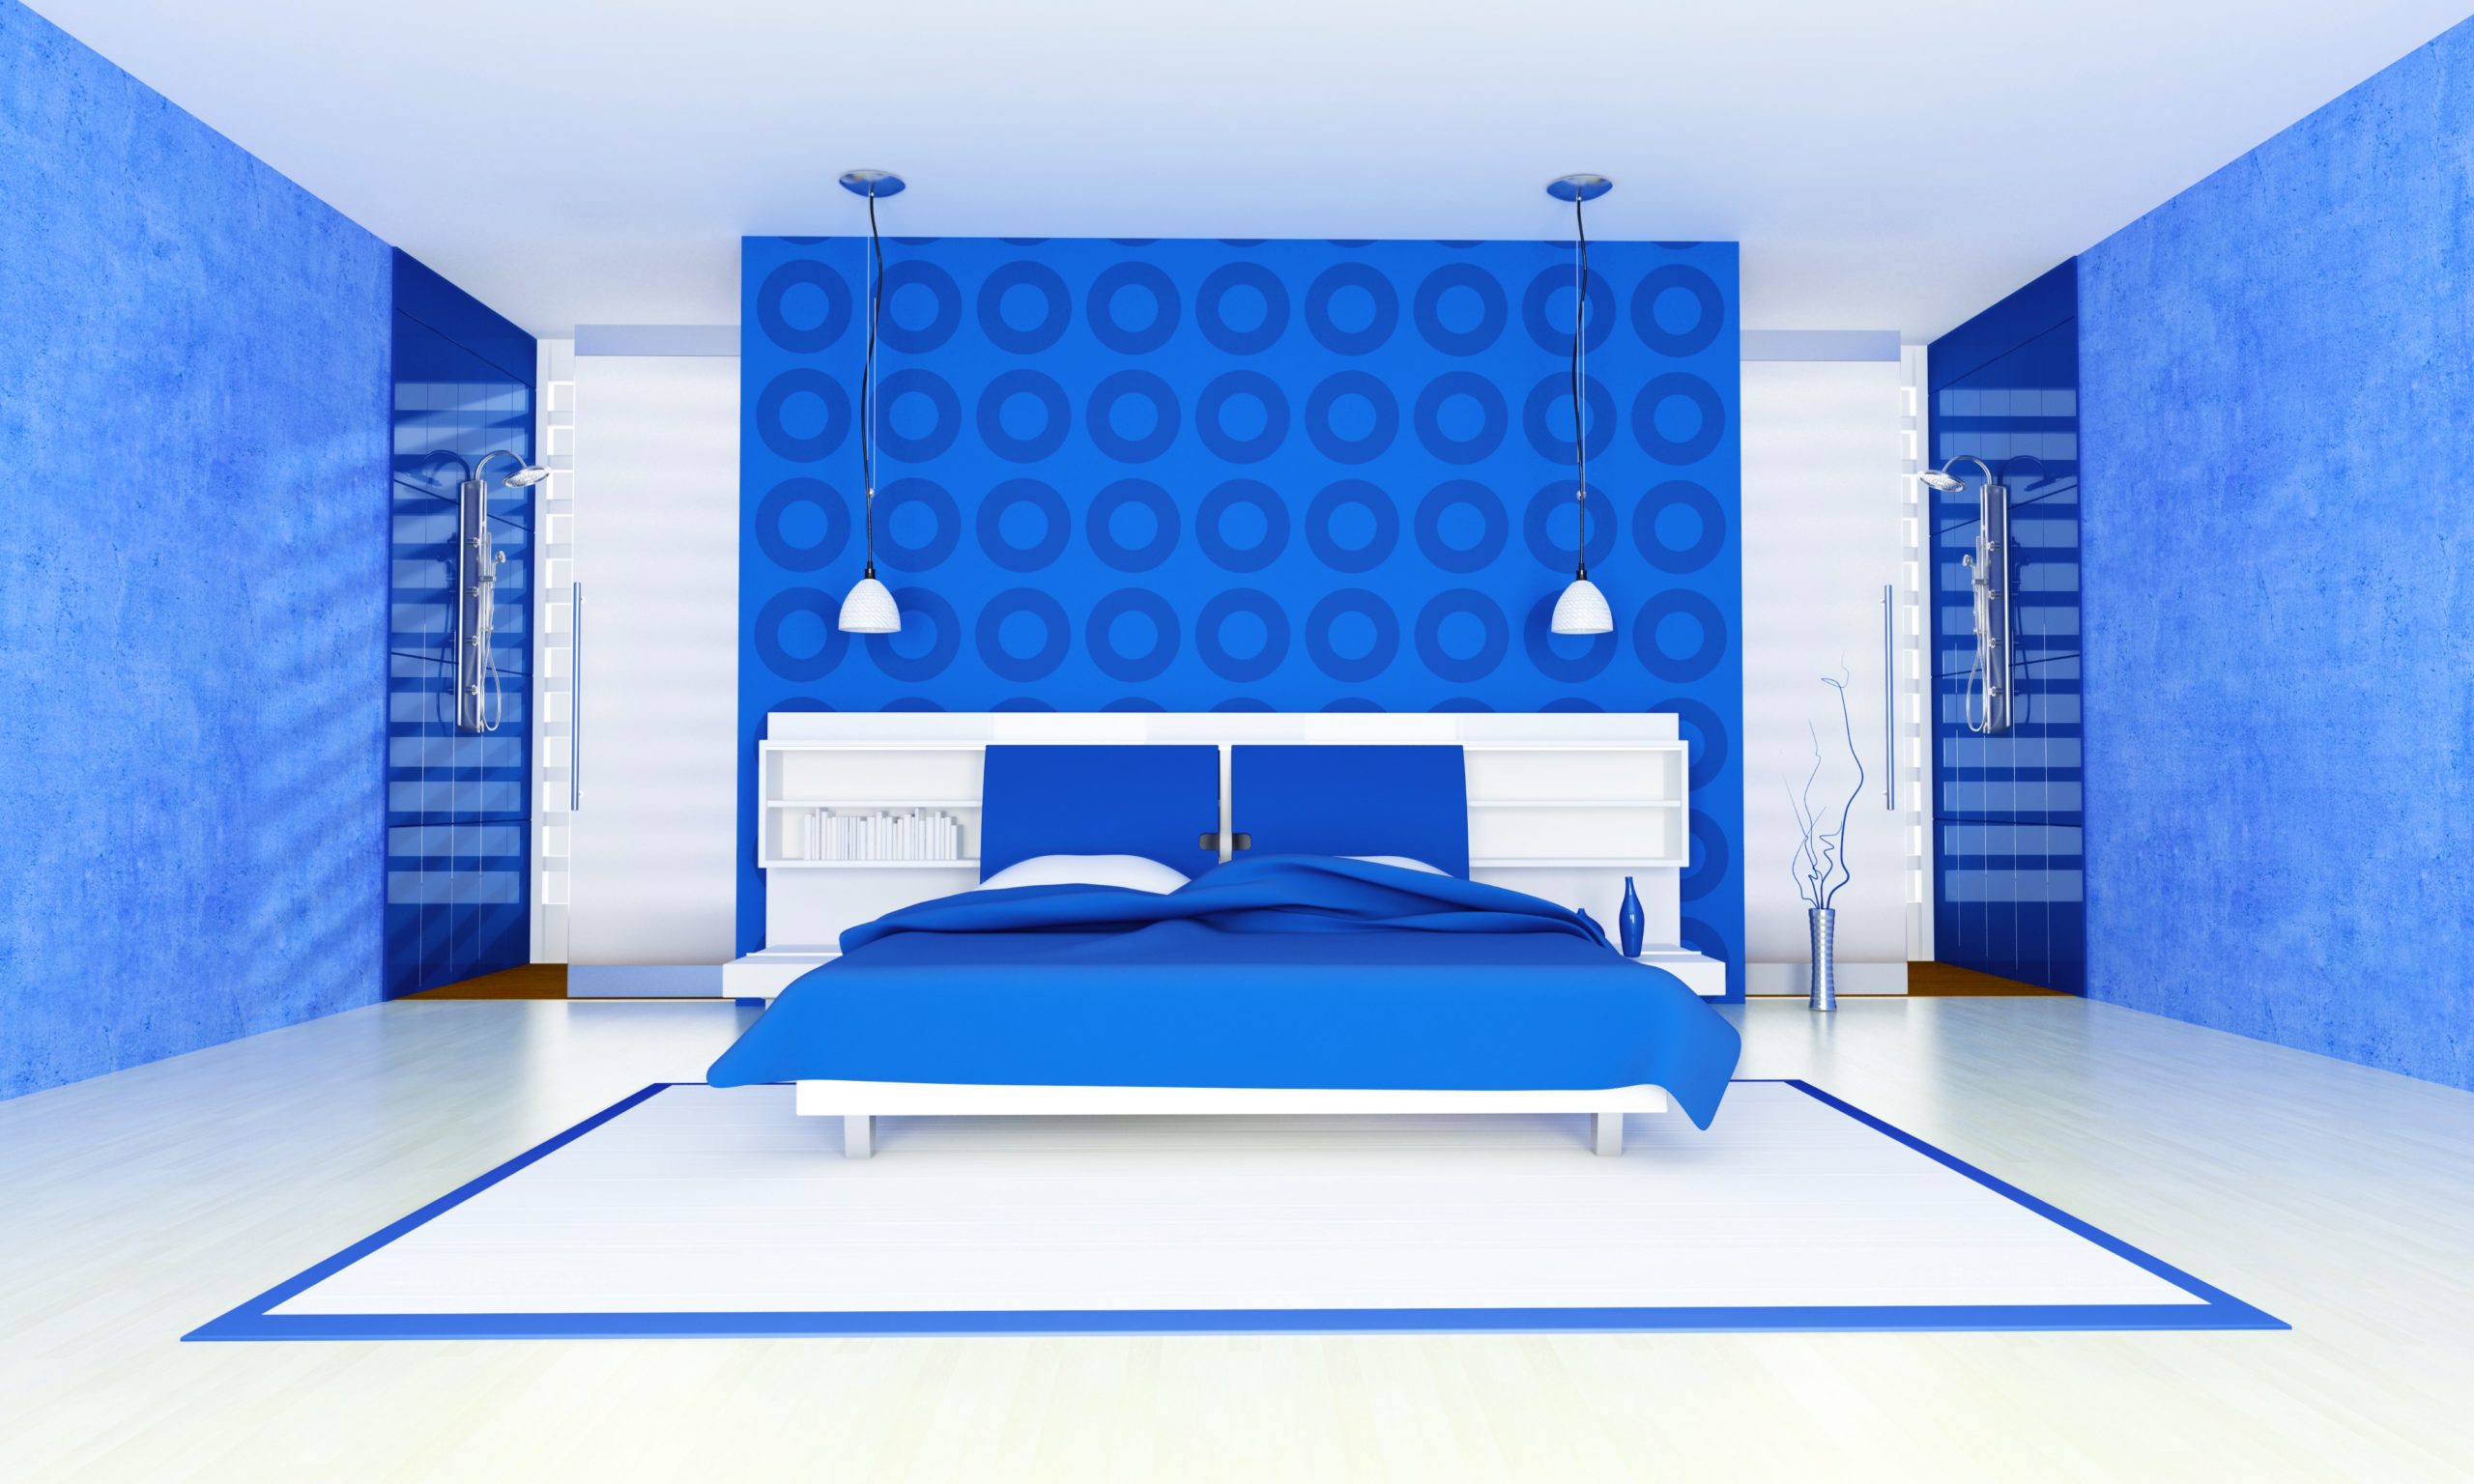 <img src="large.jpg" alt="large blue and white bedroom"/> 